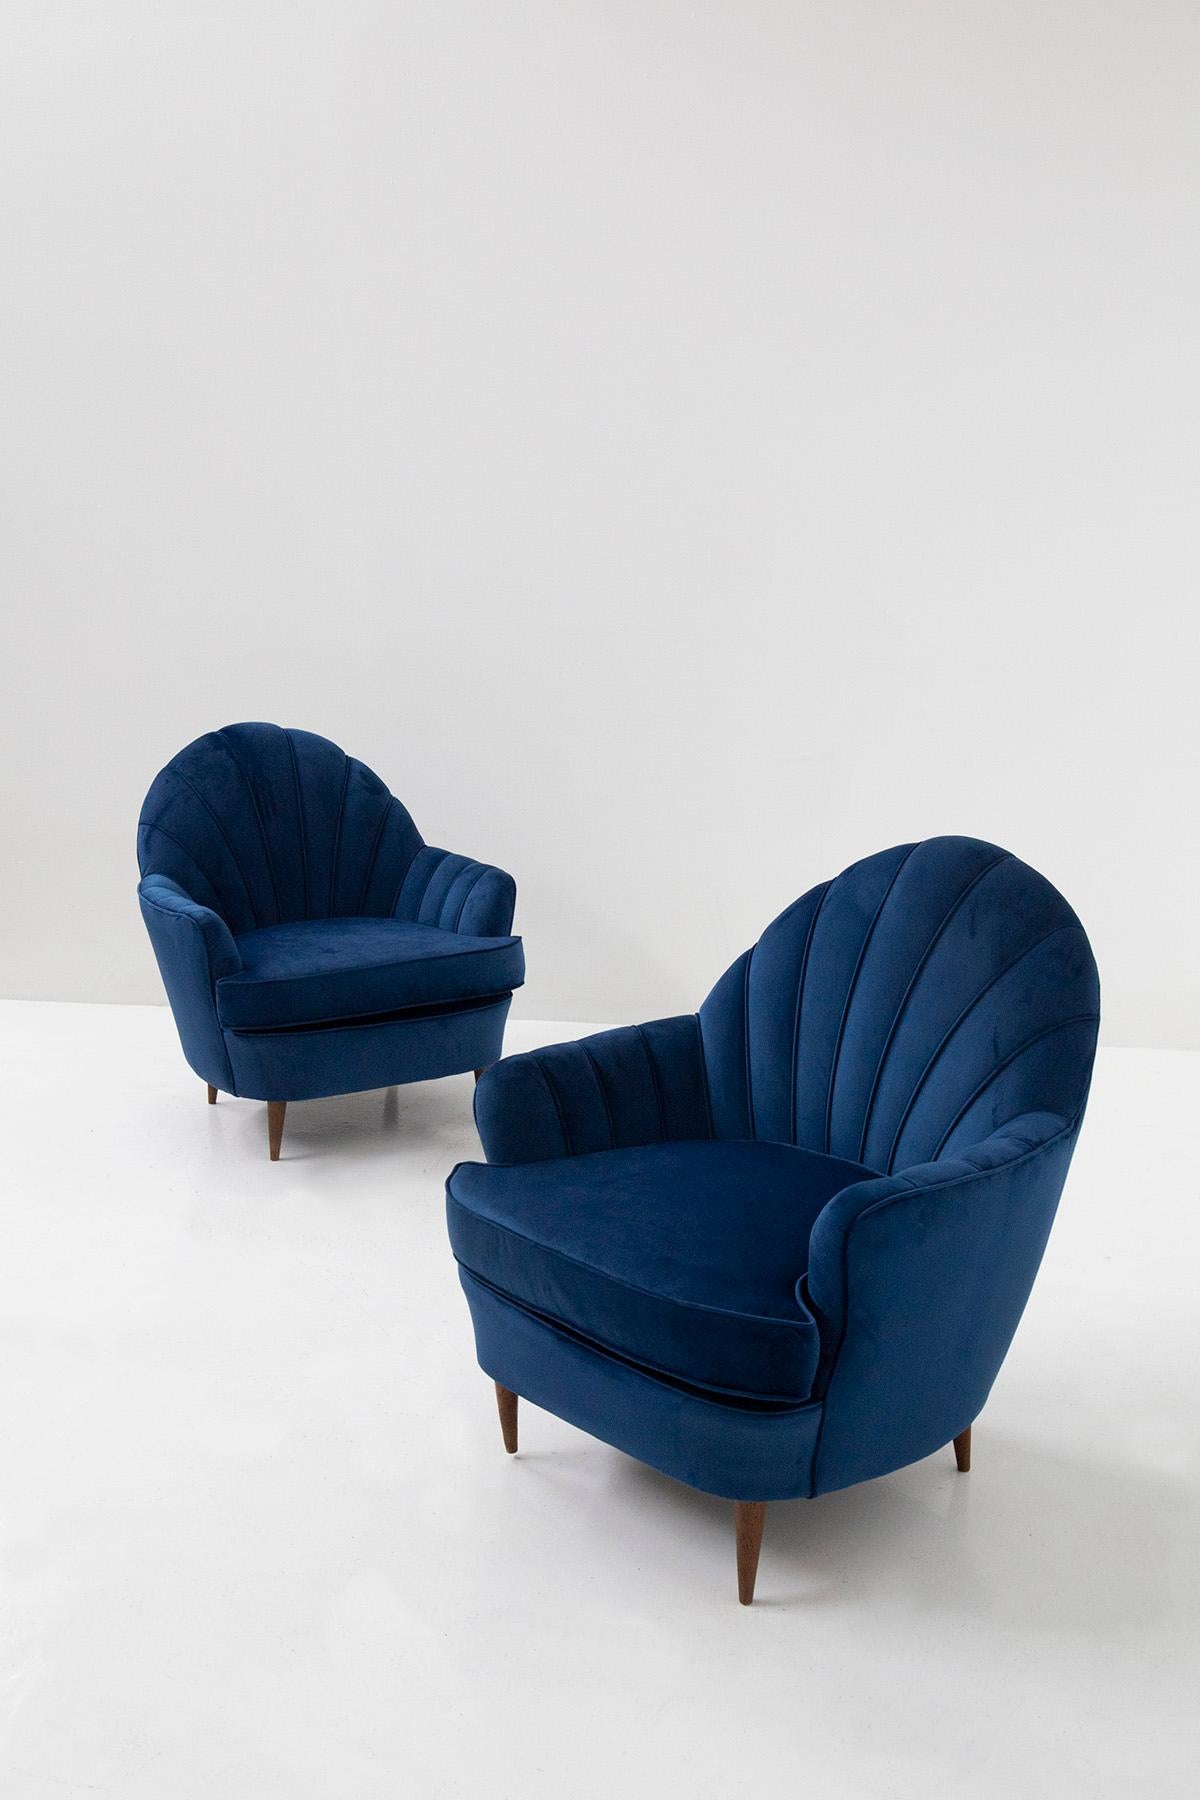 Mid-Century Modern Pair of Midcentury Italian Shell Chairs in Blue Velvet